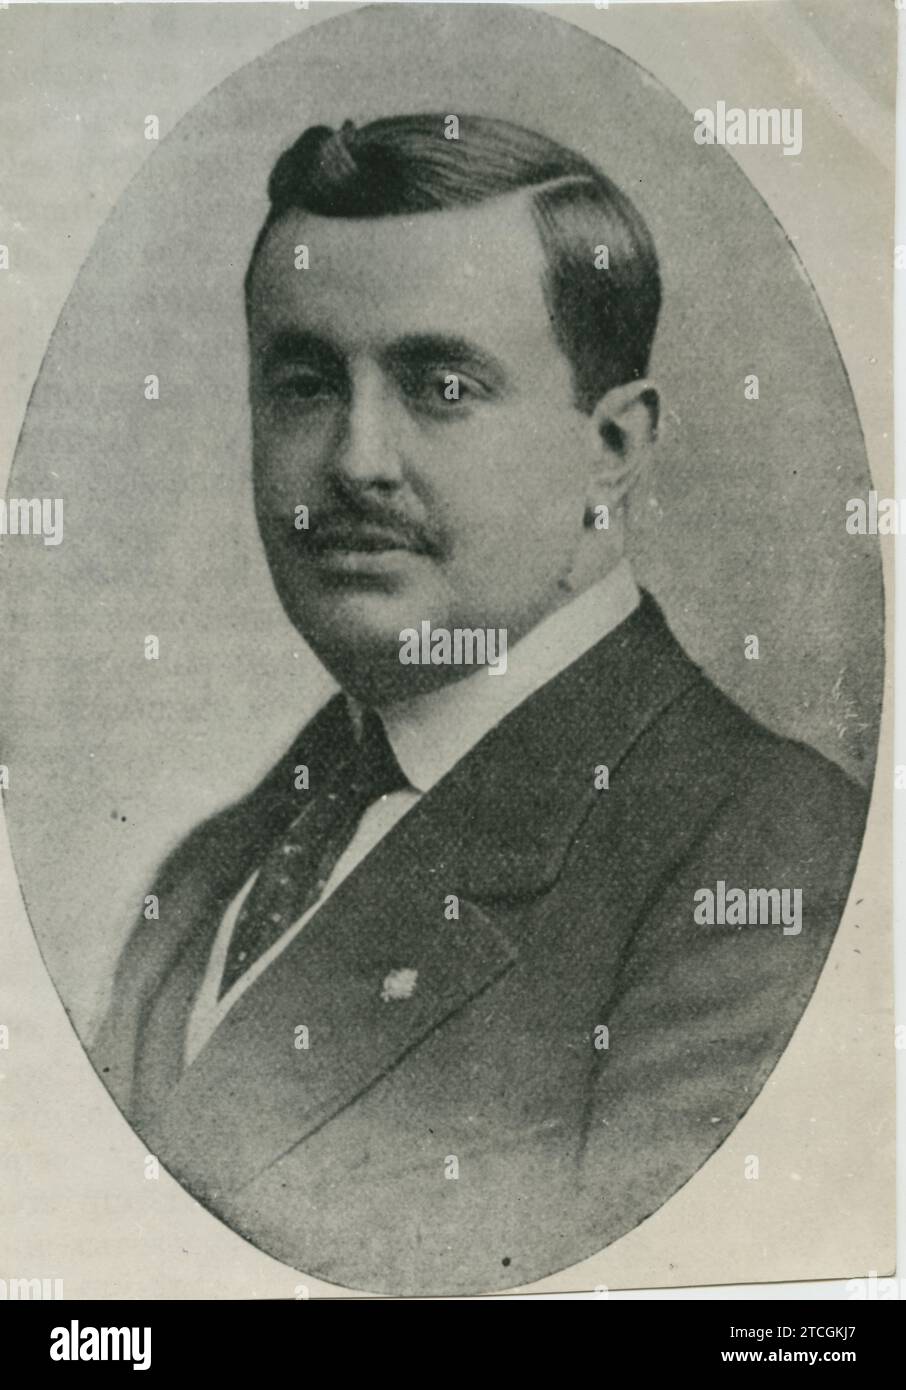 01/01/1920. Porträt von Ignacio Bauer Landauer. Quelle: Album/Archivo ABC Stockfoto